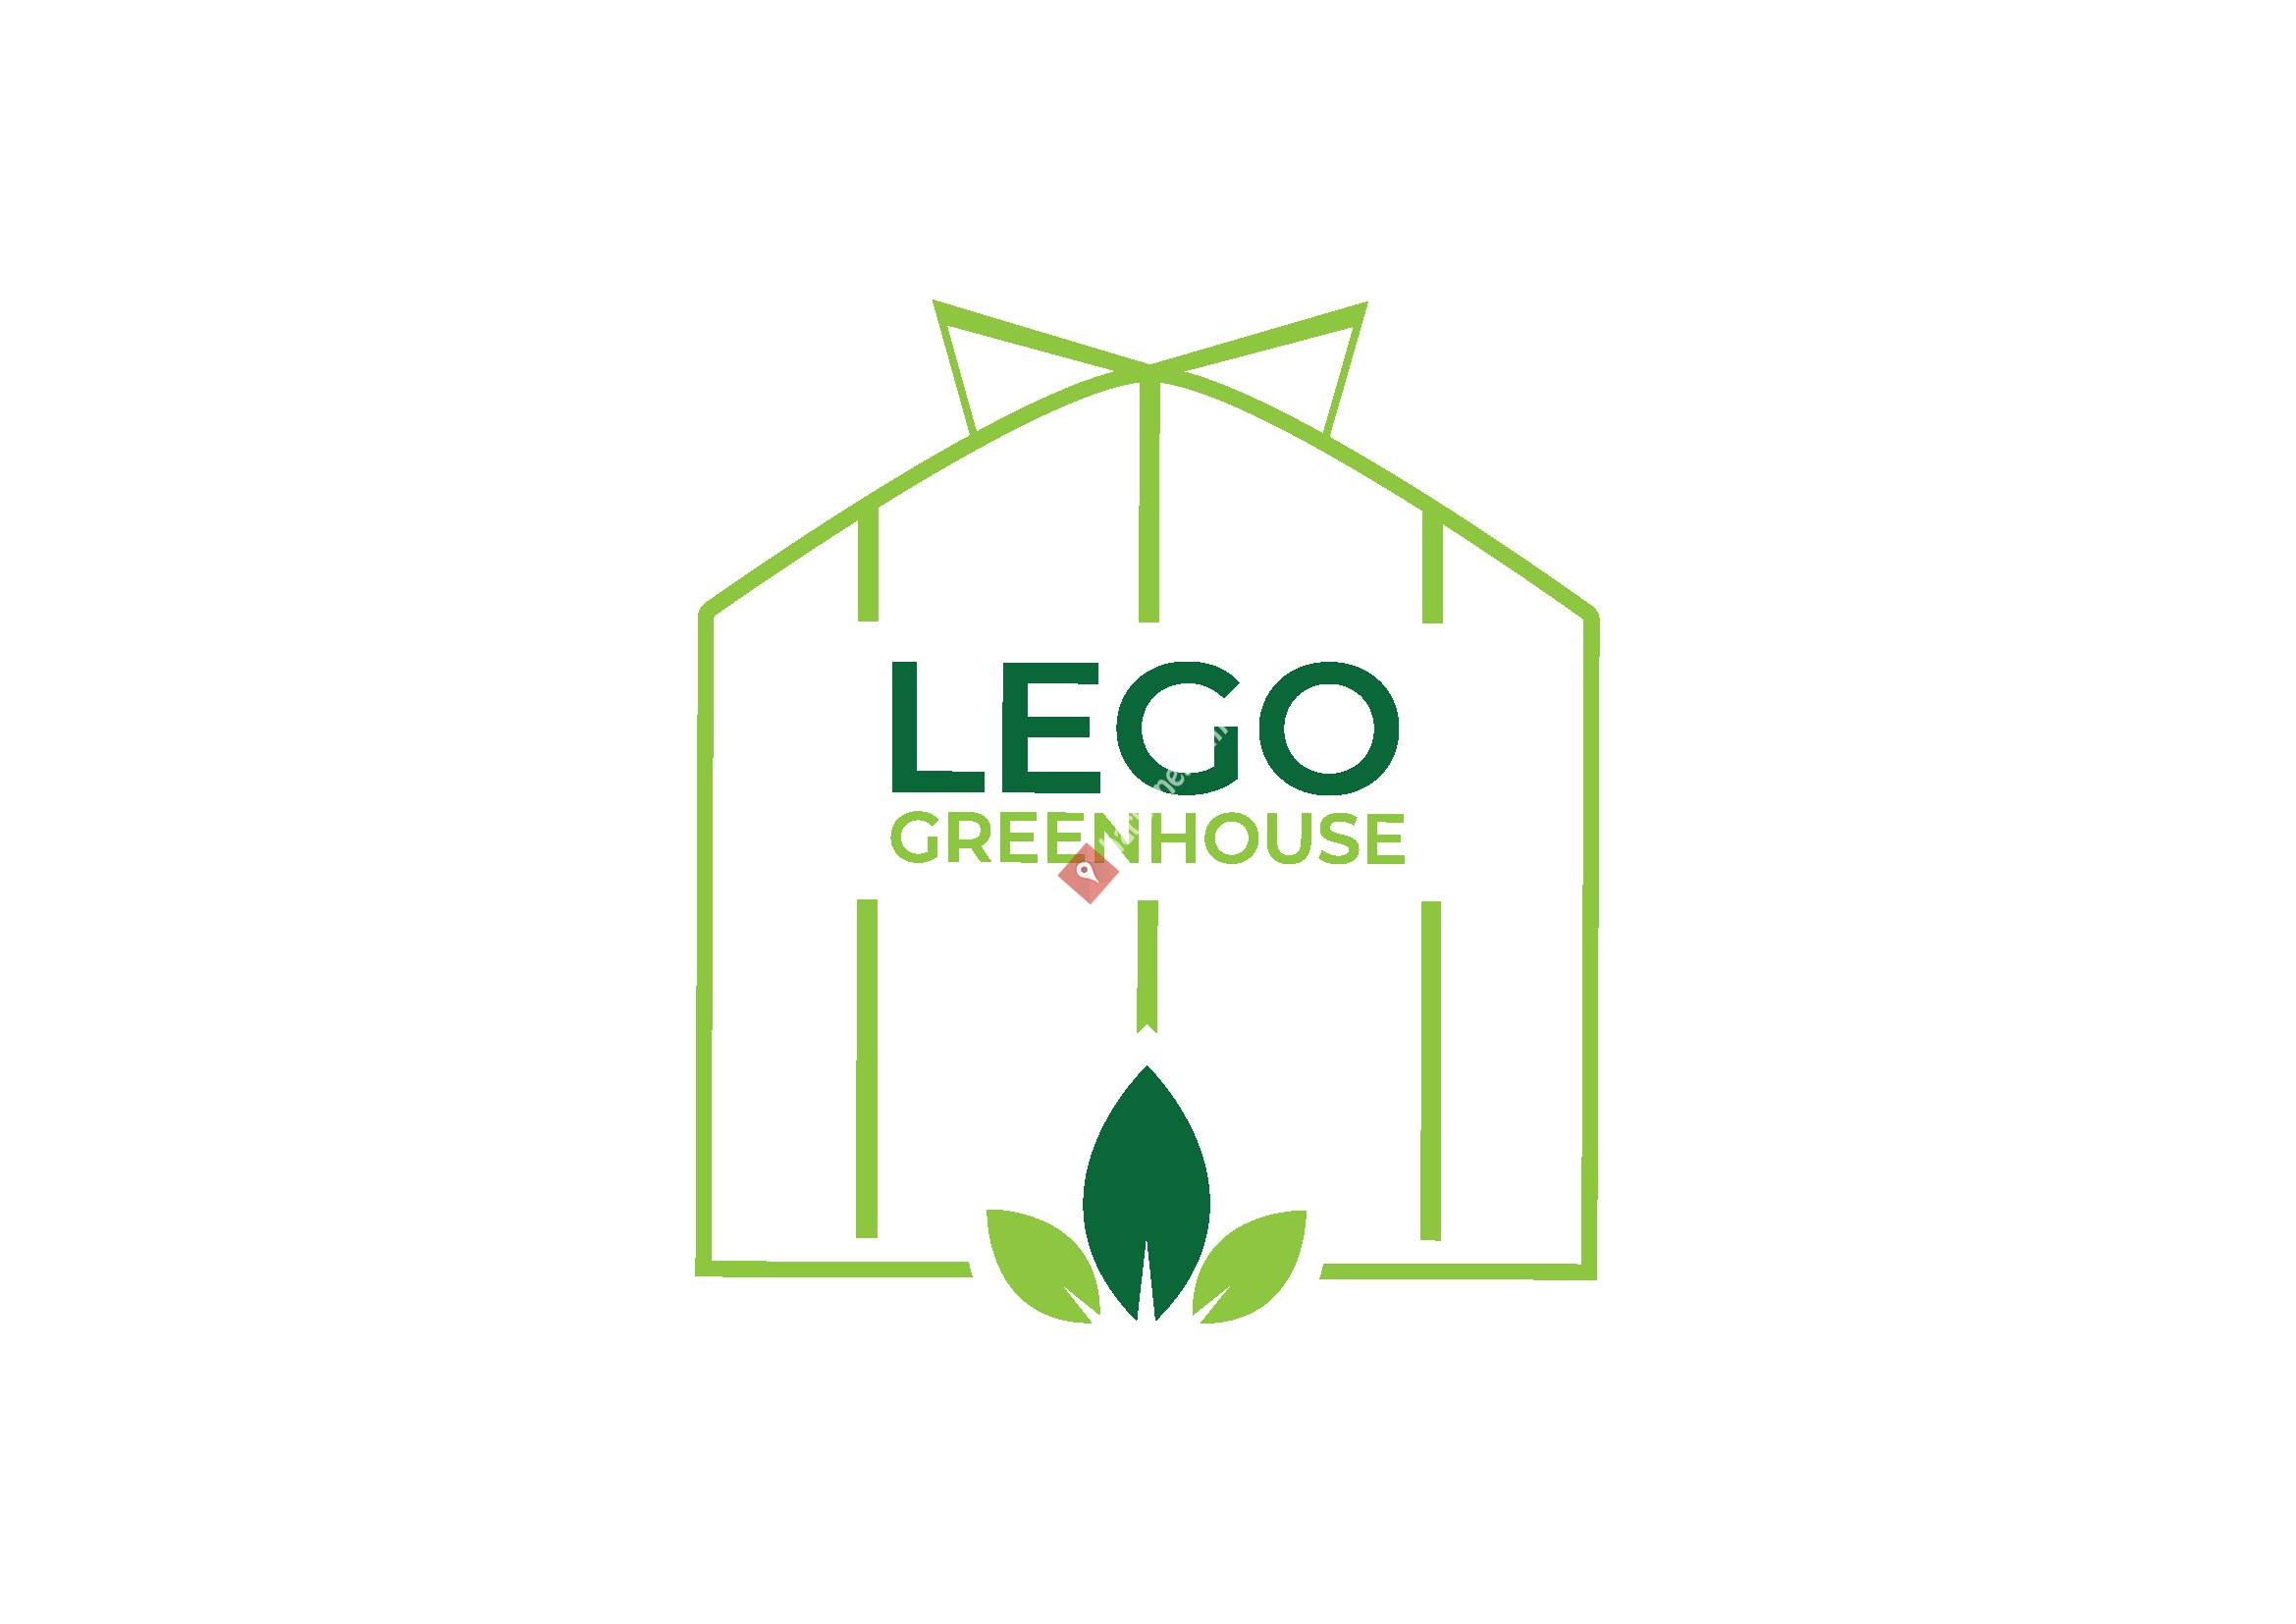 Lego Greenhouse